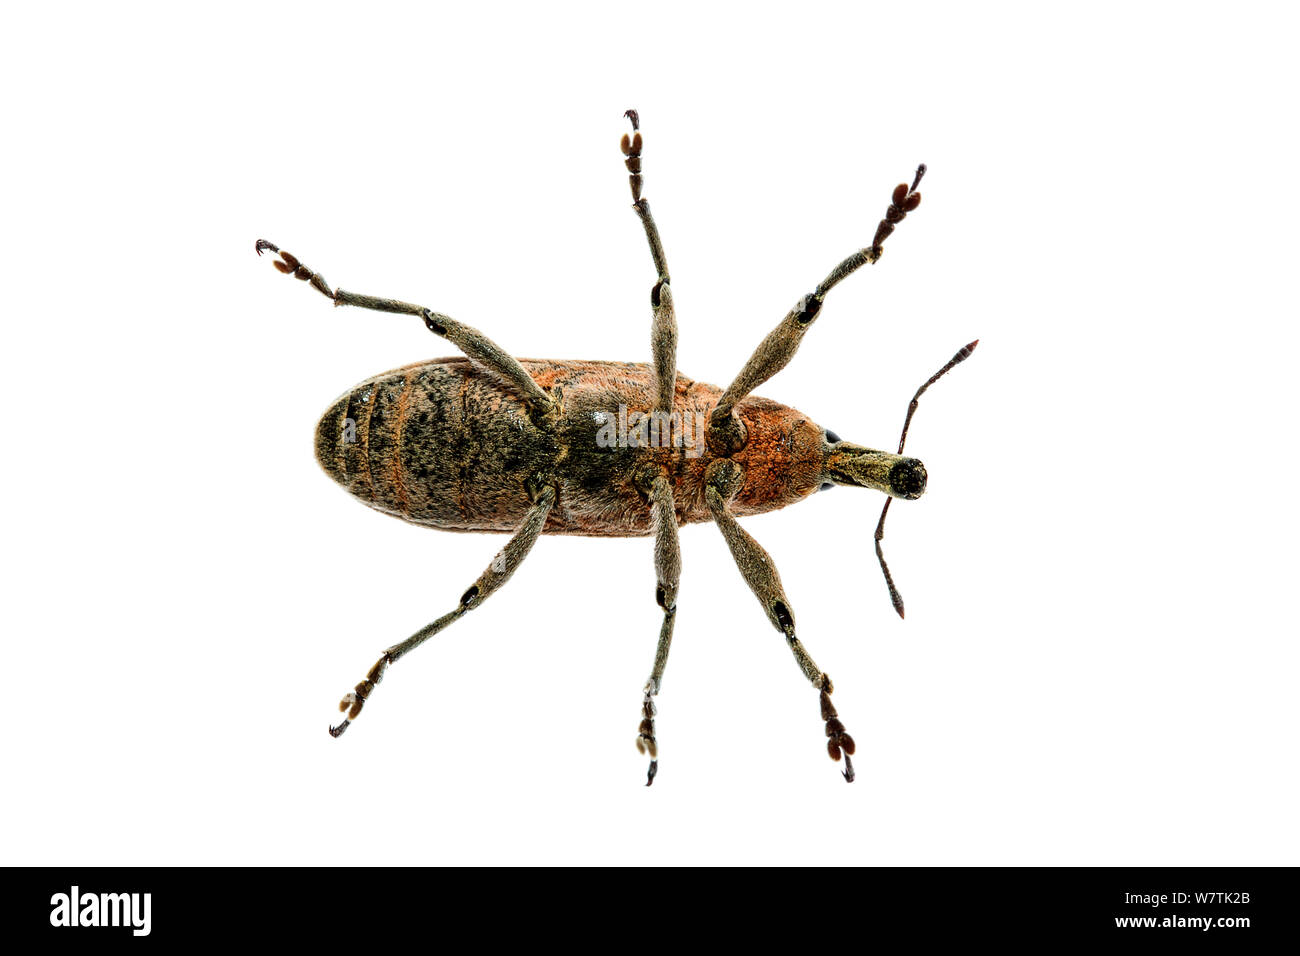 Curculione beetle (Lixus sp.), Creta, Grecia. Progetto Meetyourneighbors.net Foto Stock